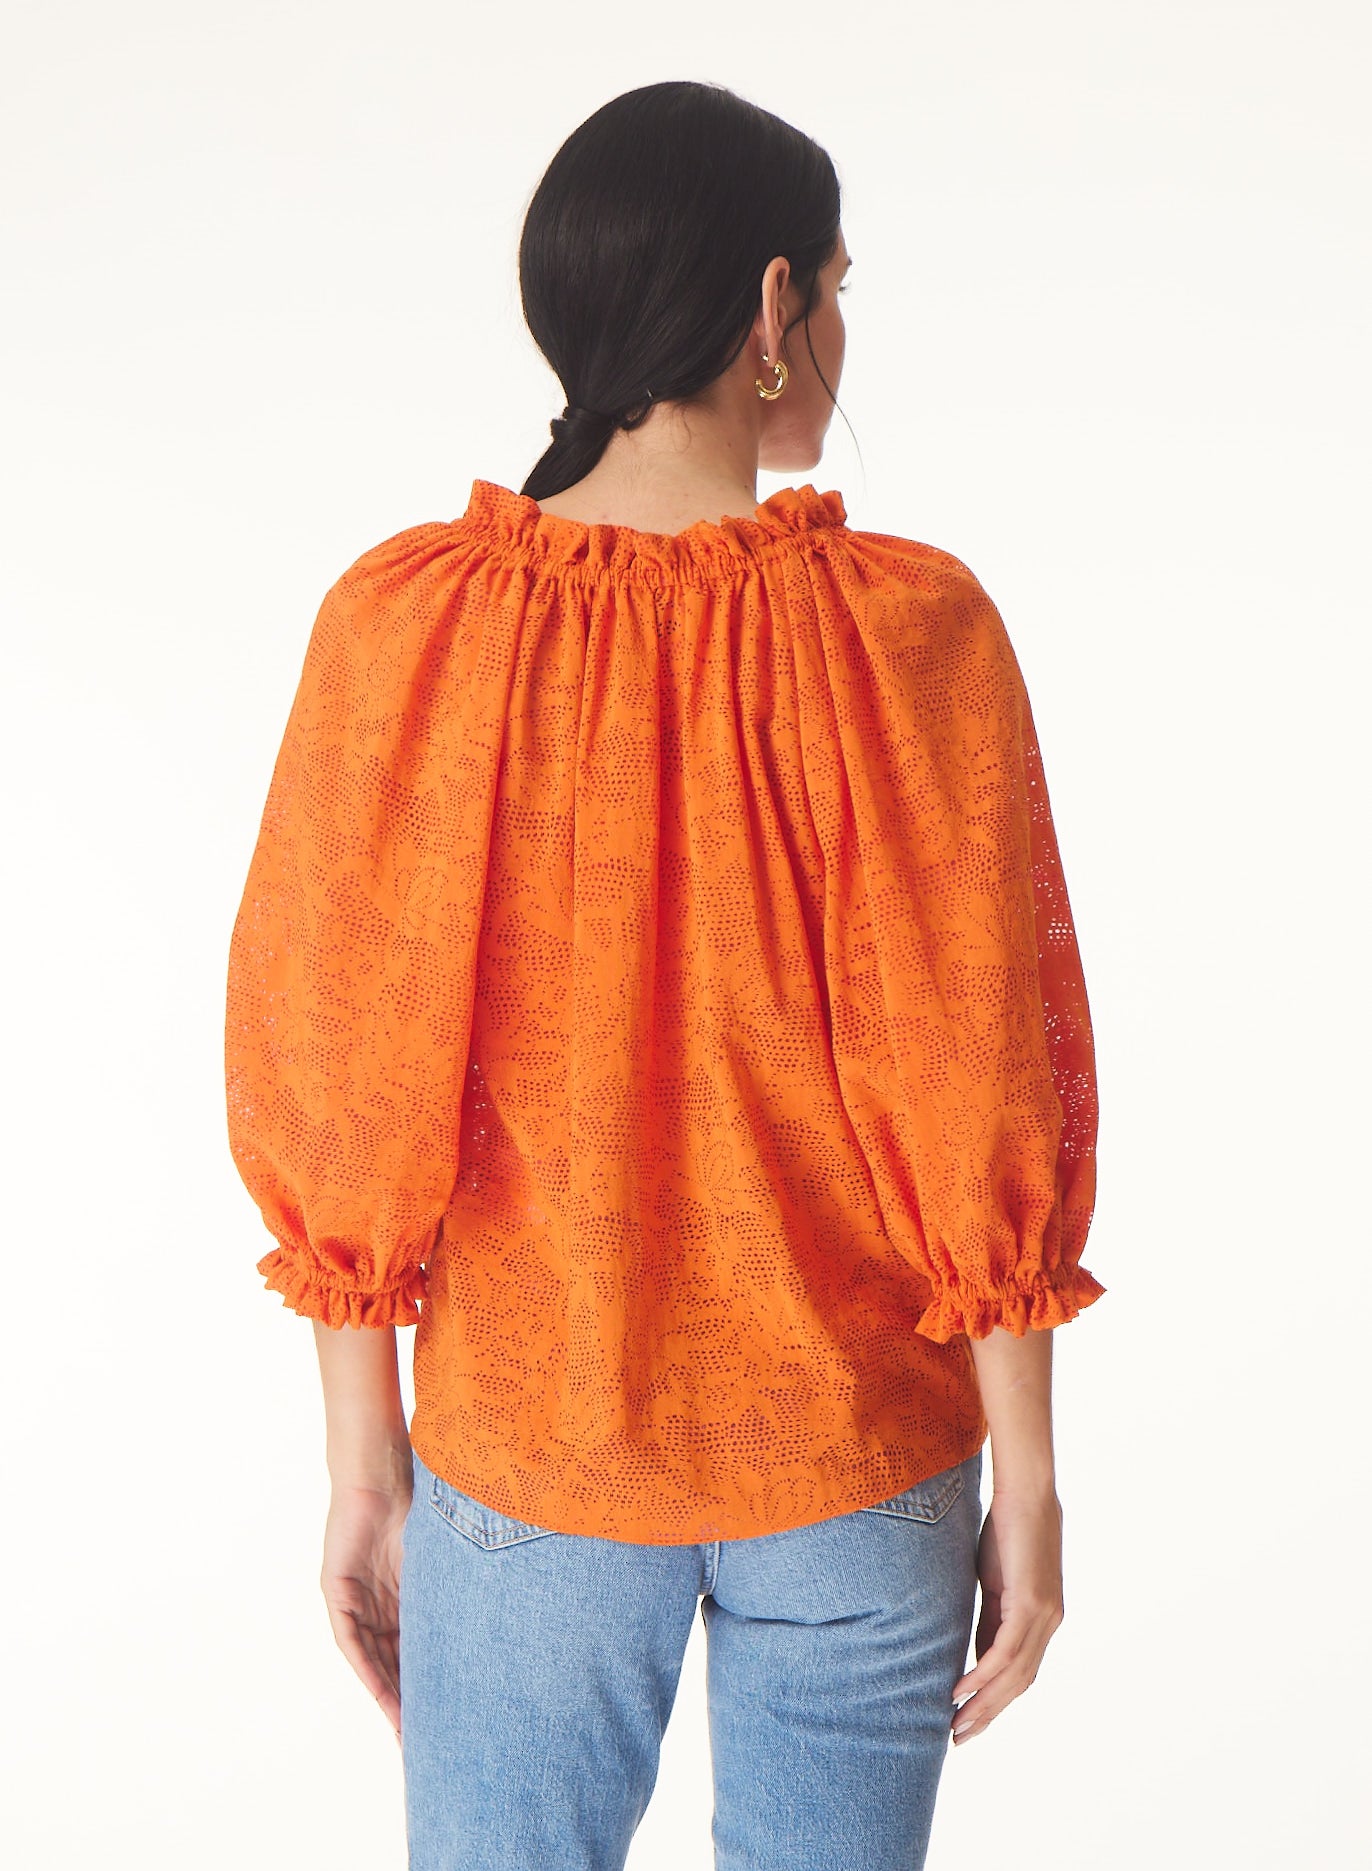 Ellie blouse in Solid bright orange - Gilner Farrar